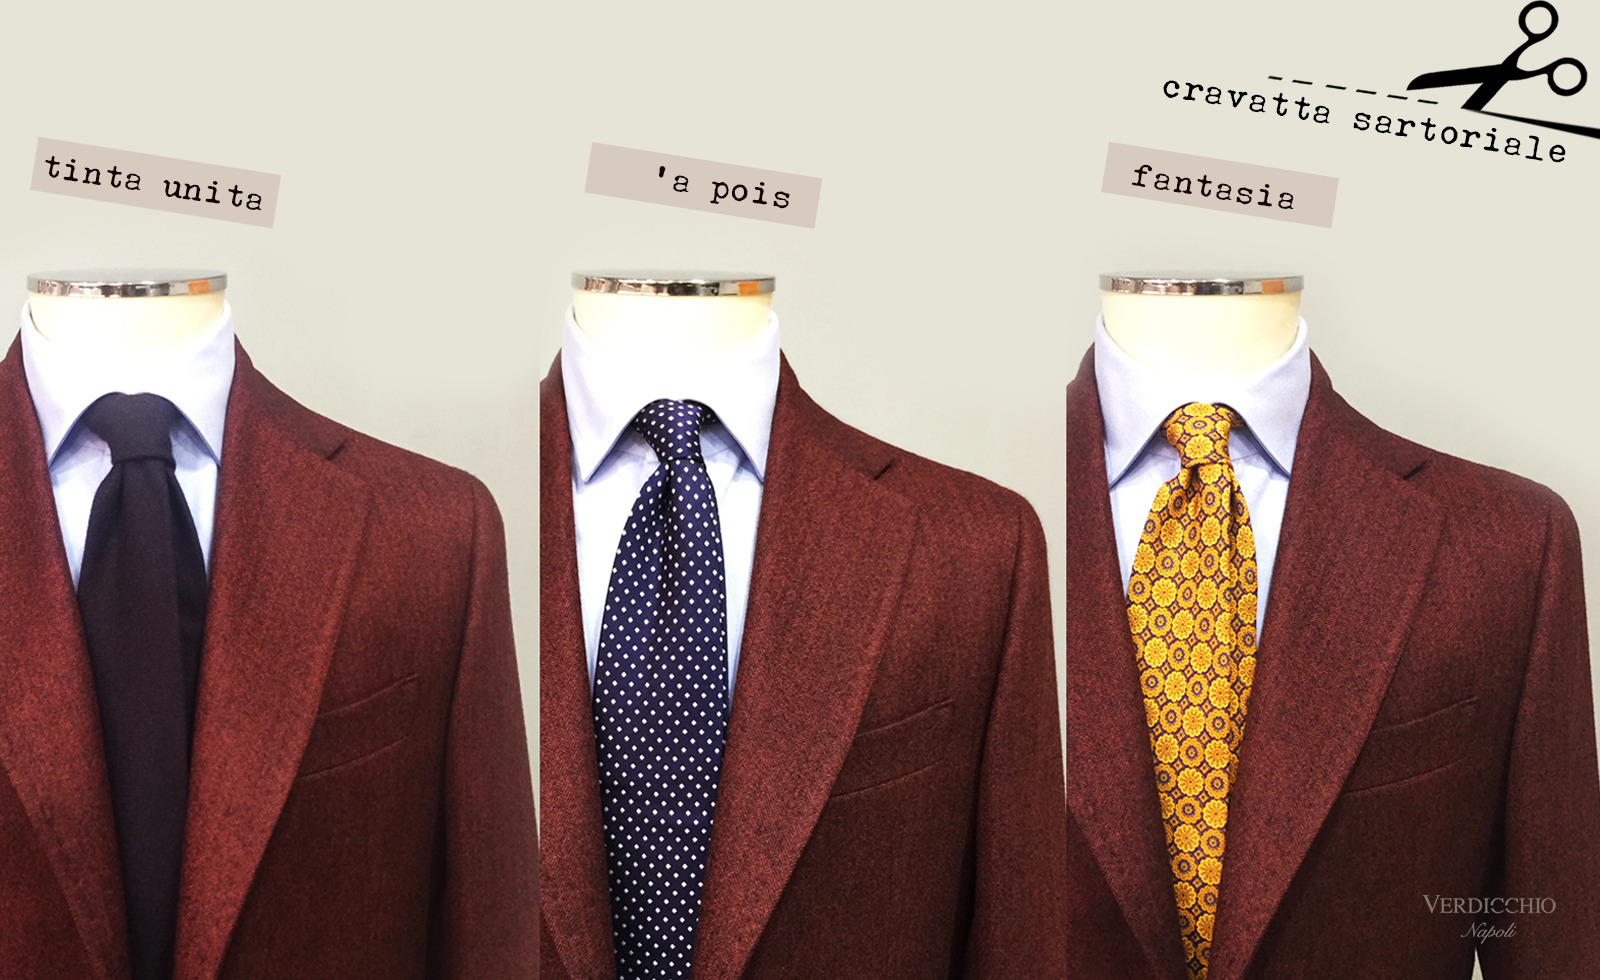 cravatta sartoriale 3 modelli e 3 fantasie